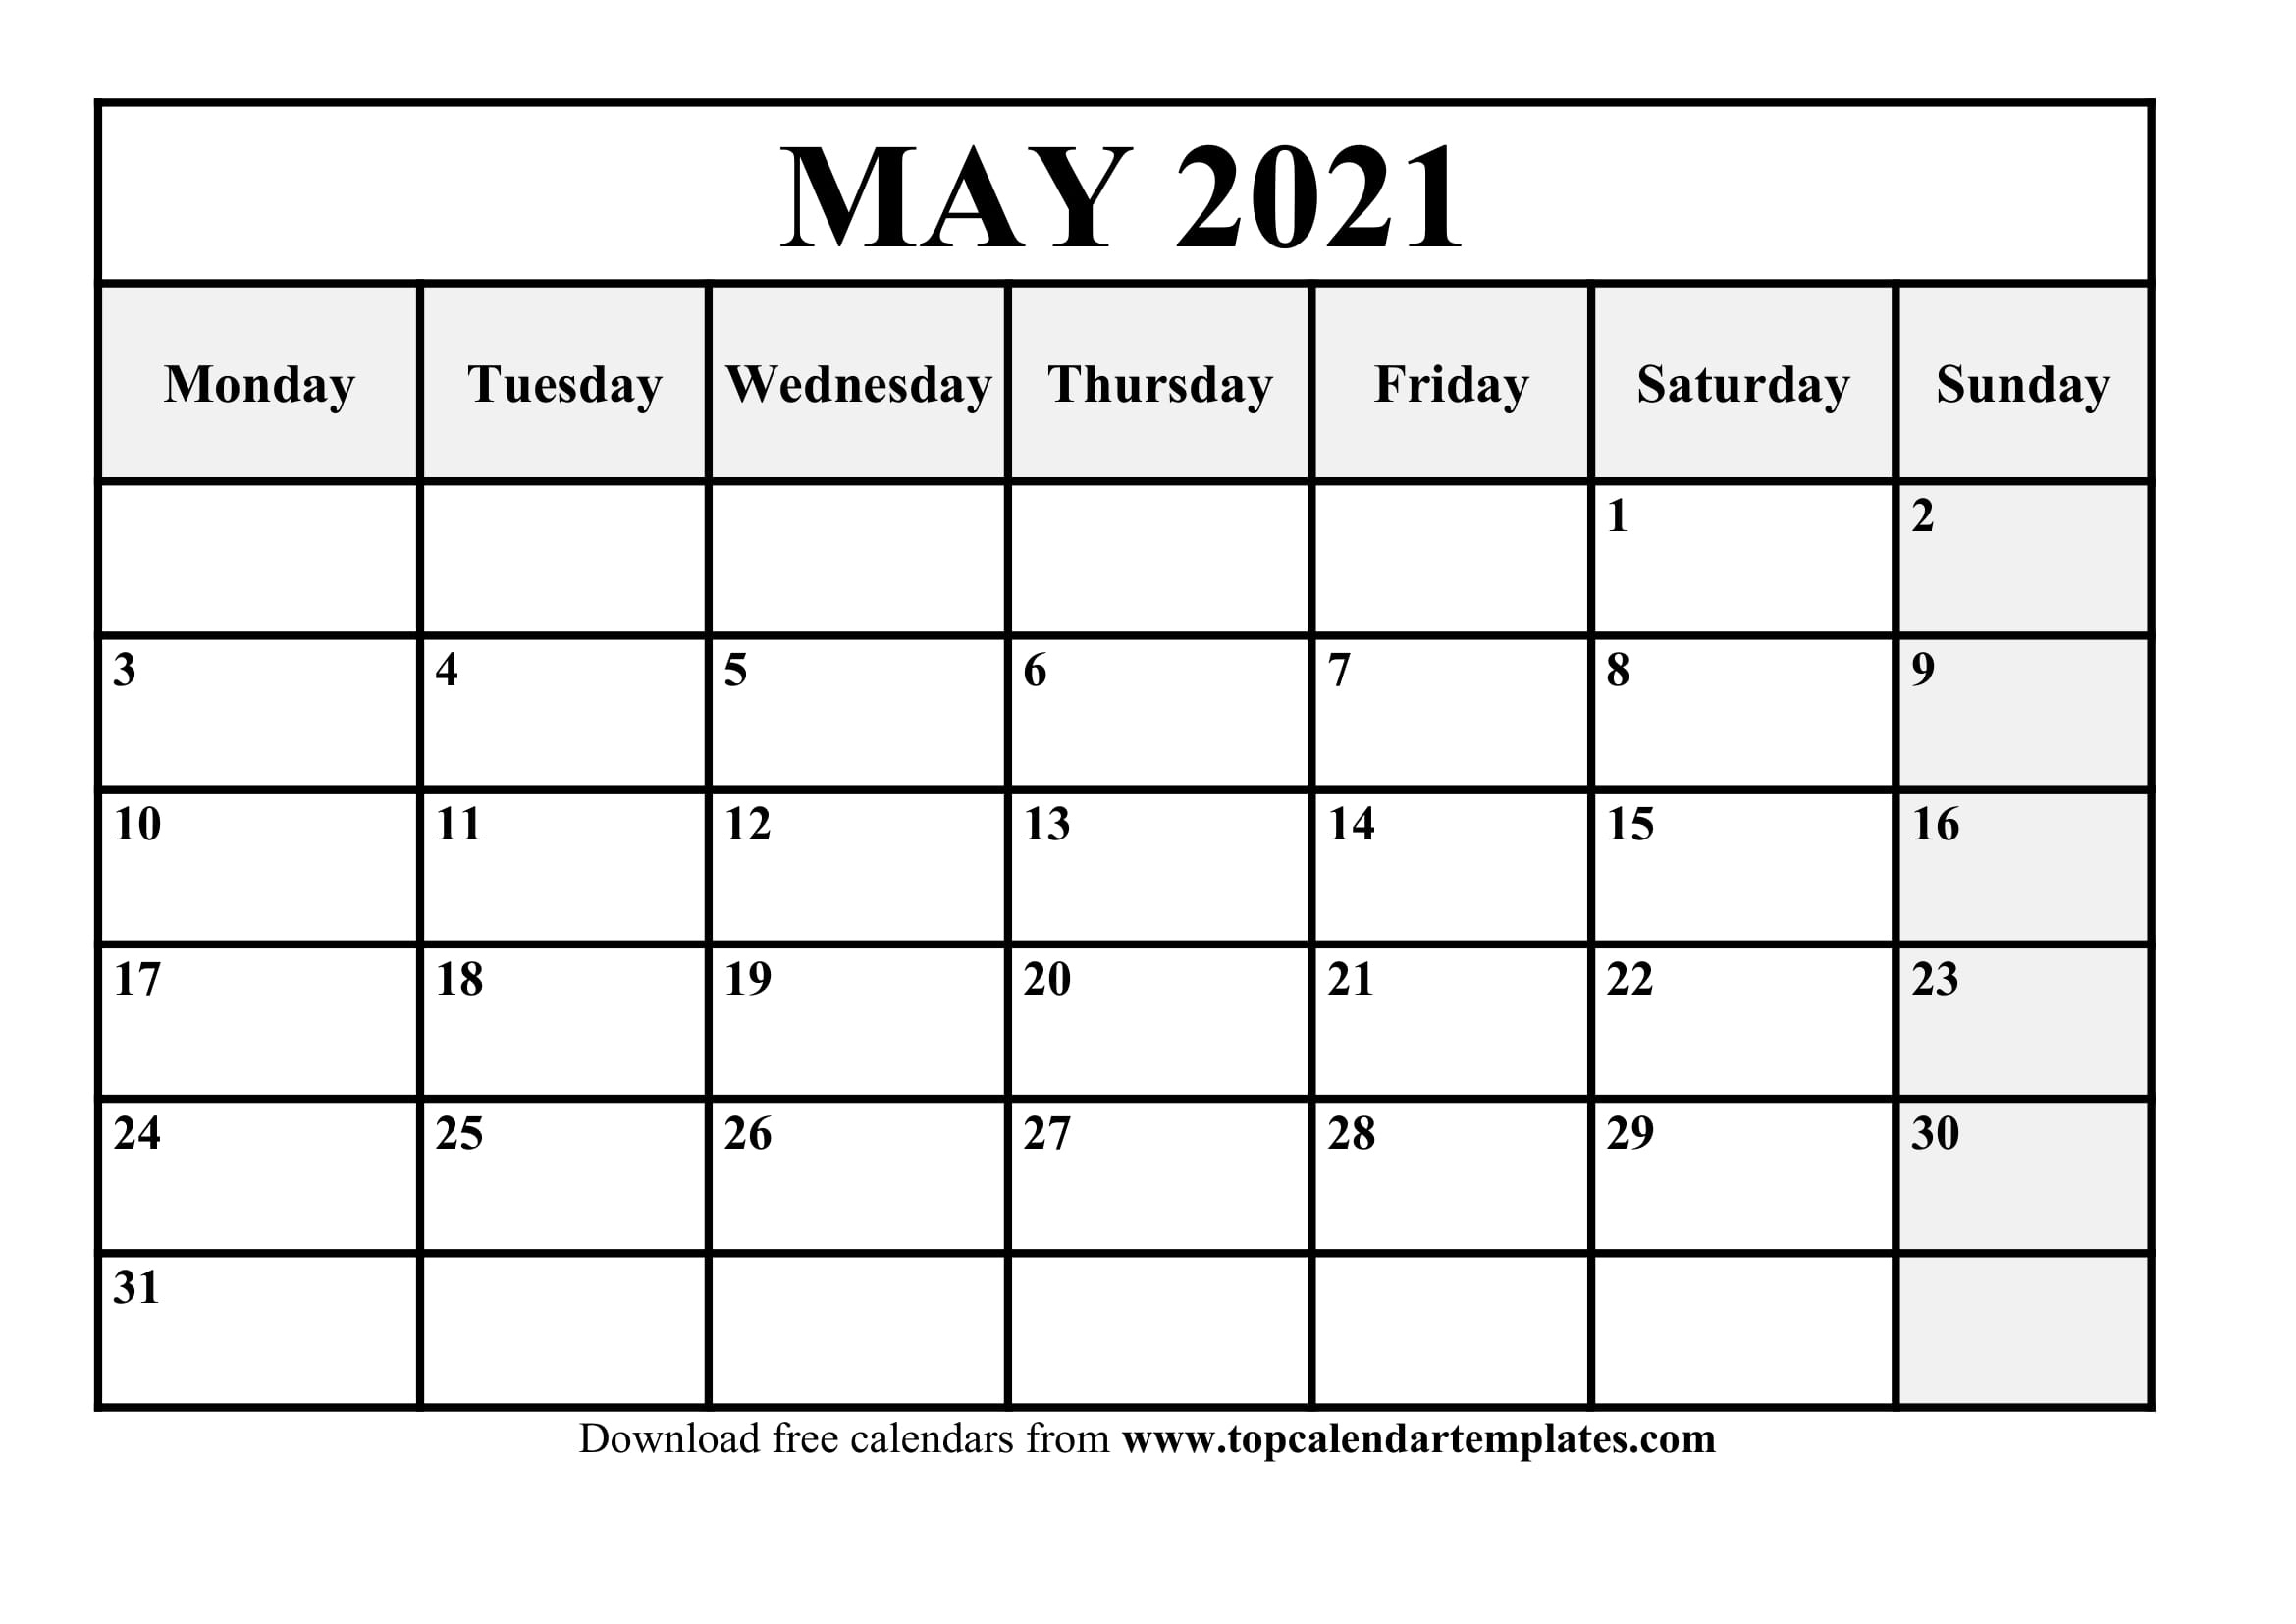 Free May 2021 Printable Calendar In Editable Format August 2021 Calendar Editable